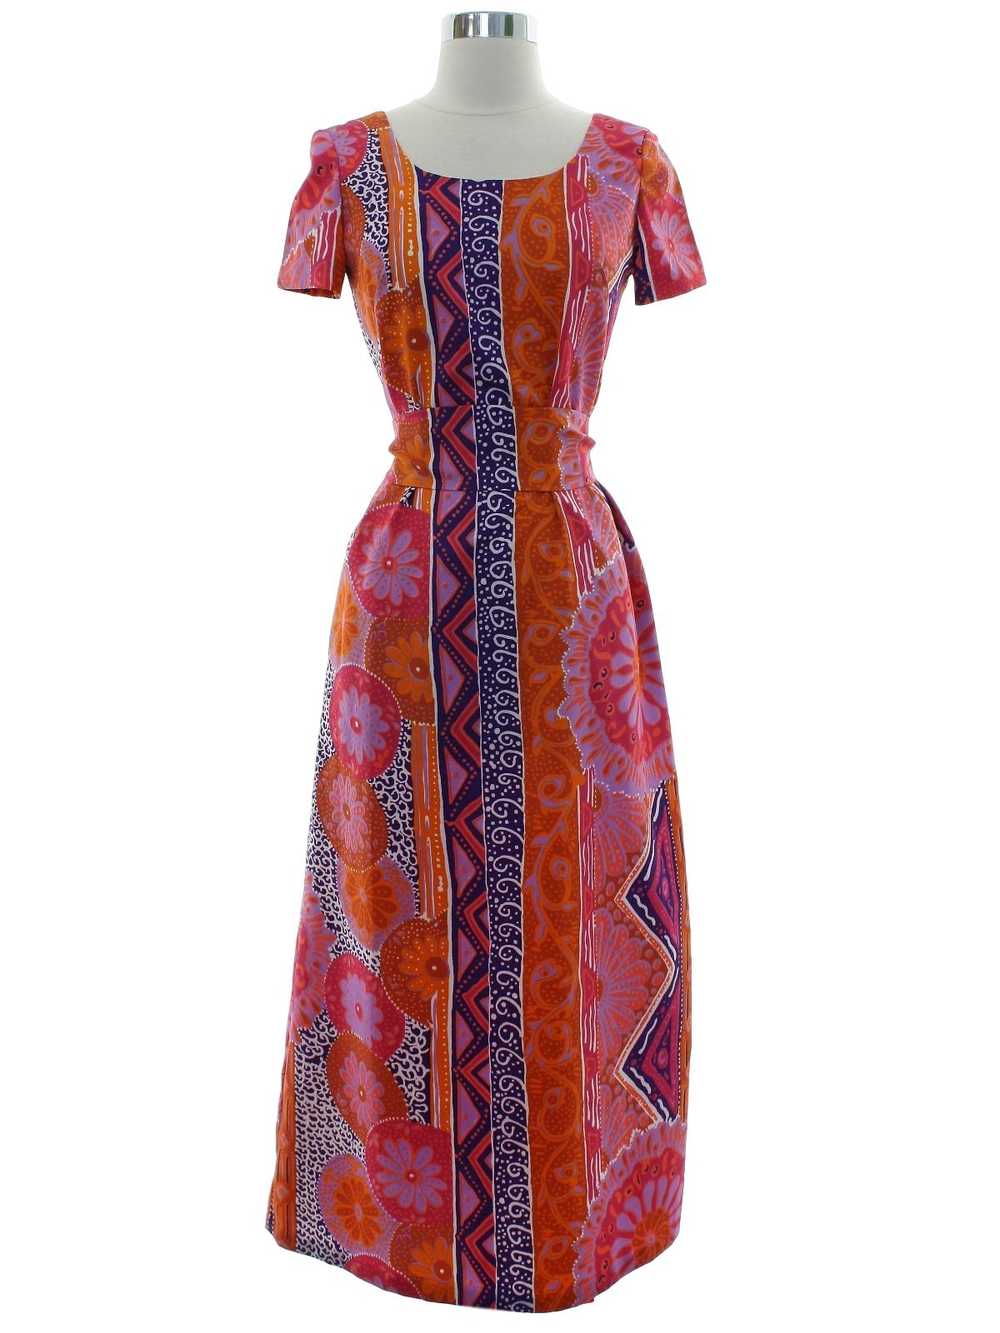 1970's Hippie Maxi Dress - image 1